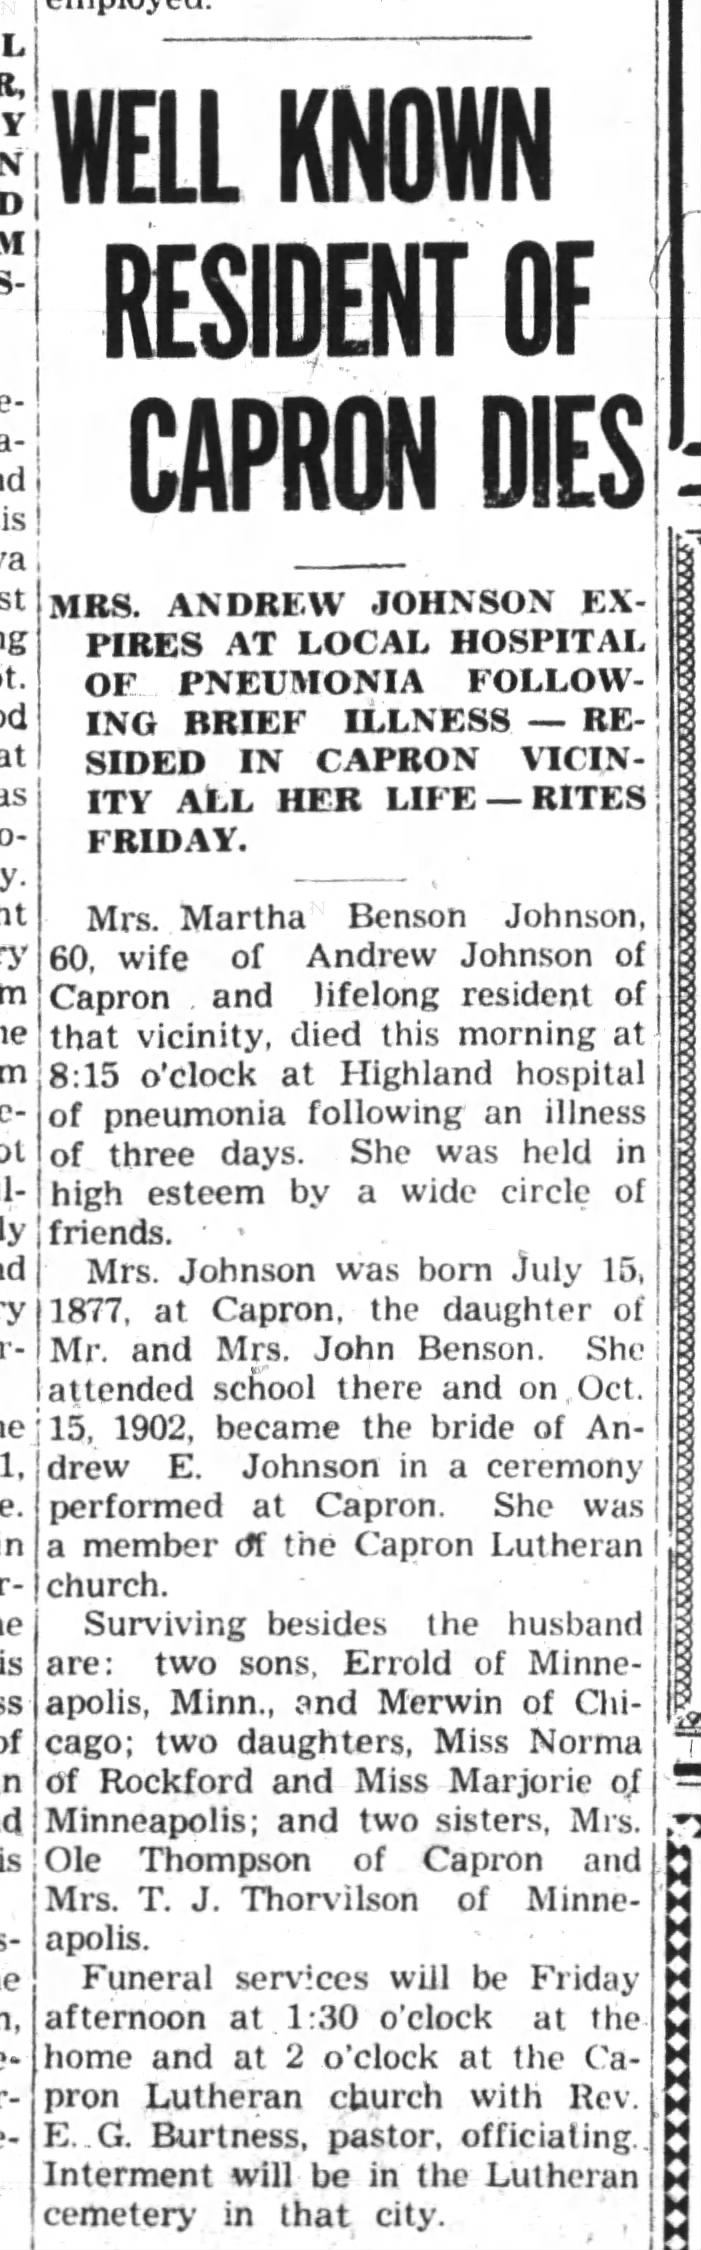 1 Mar 1938 in BDR - Death of Martha Benson Johnson.